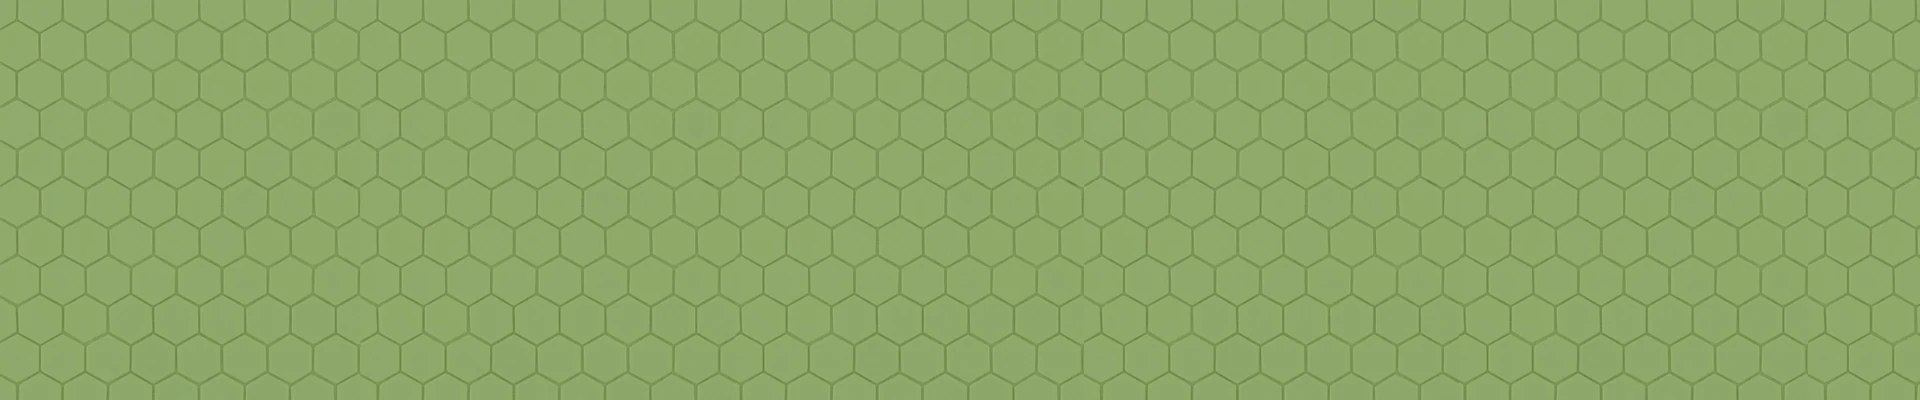 gresite hexagonal para piscina verde